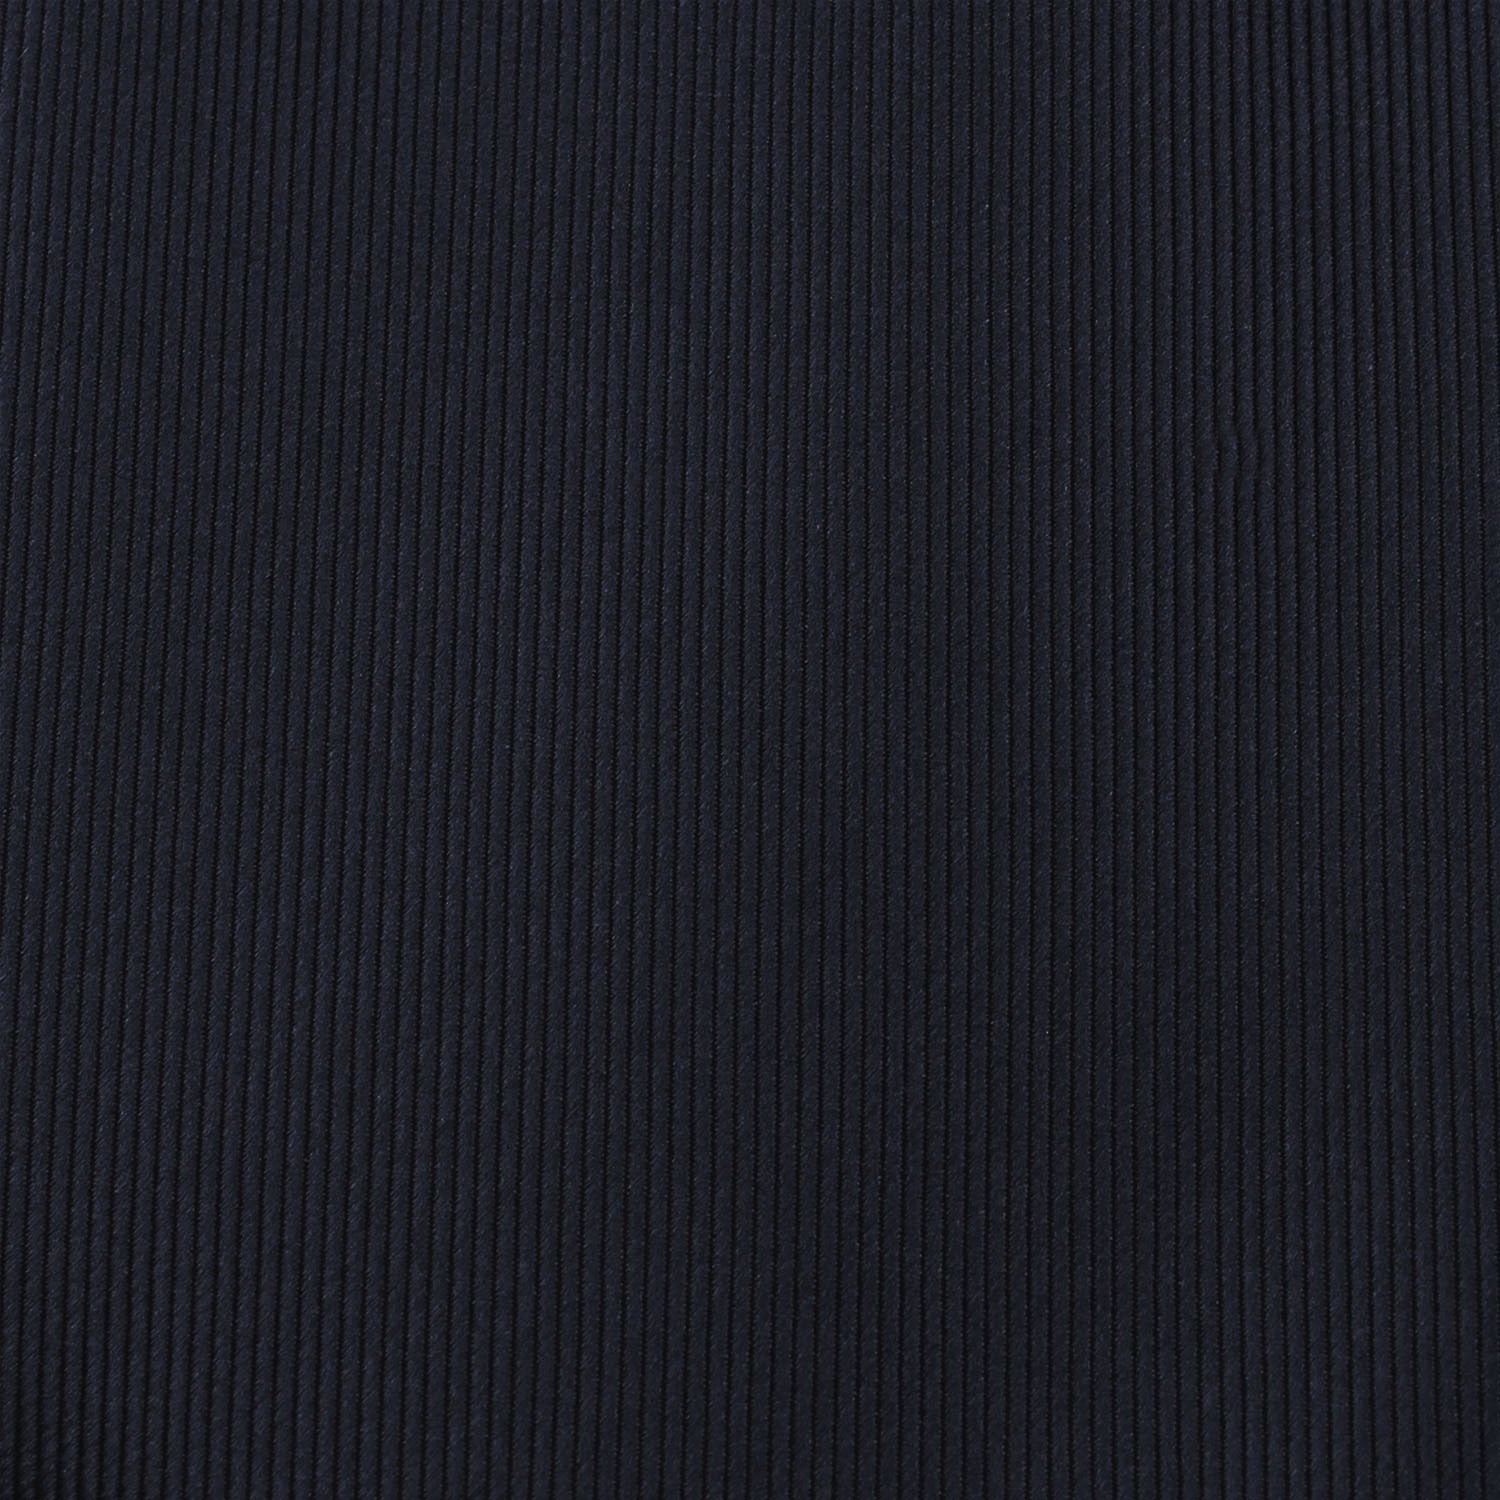 Navy Blue Line Fabric Self Tie Bow Tie X520